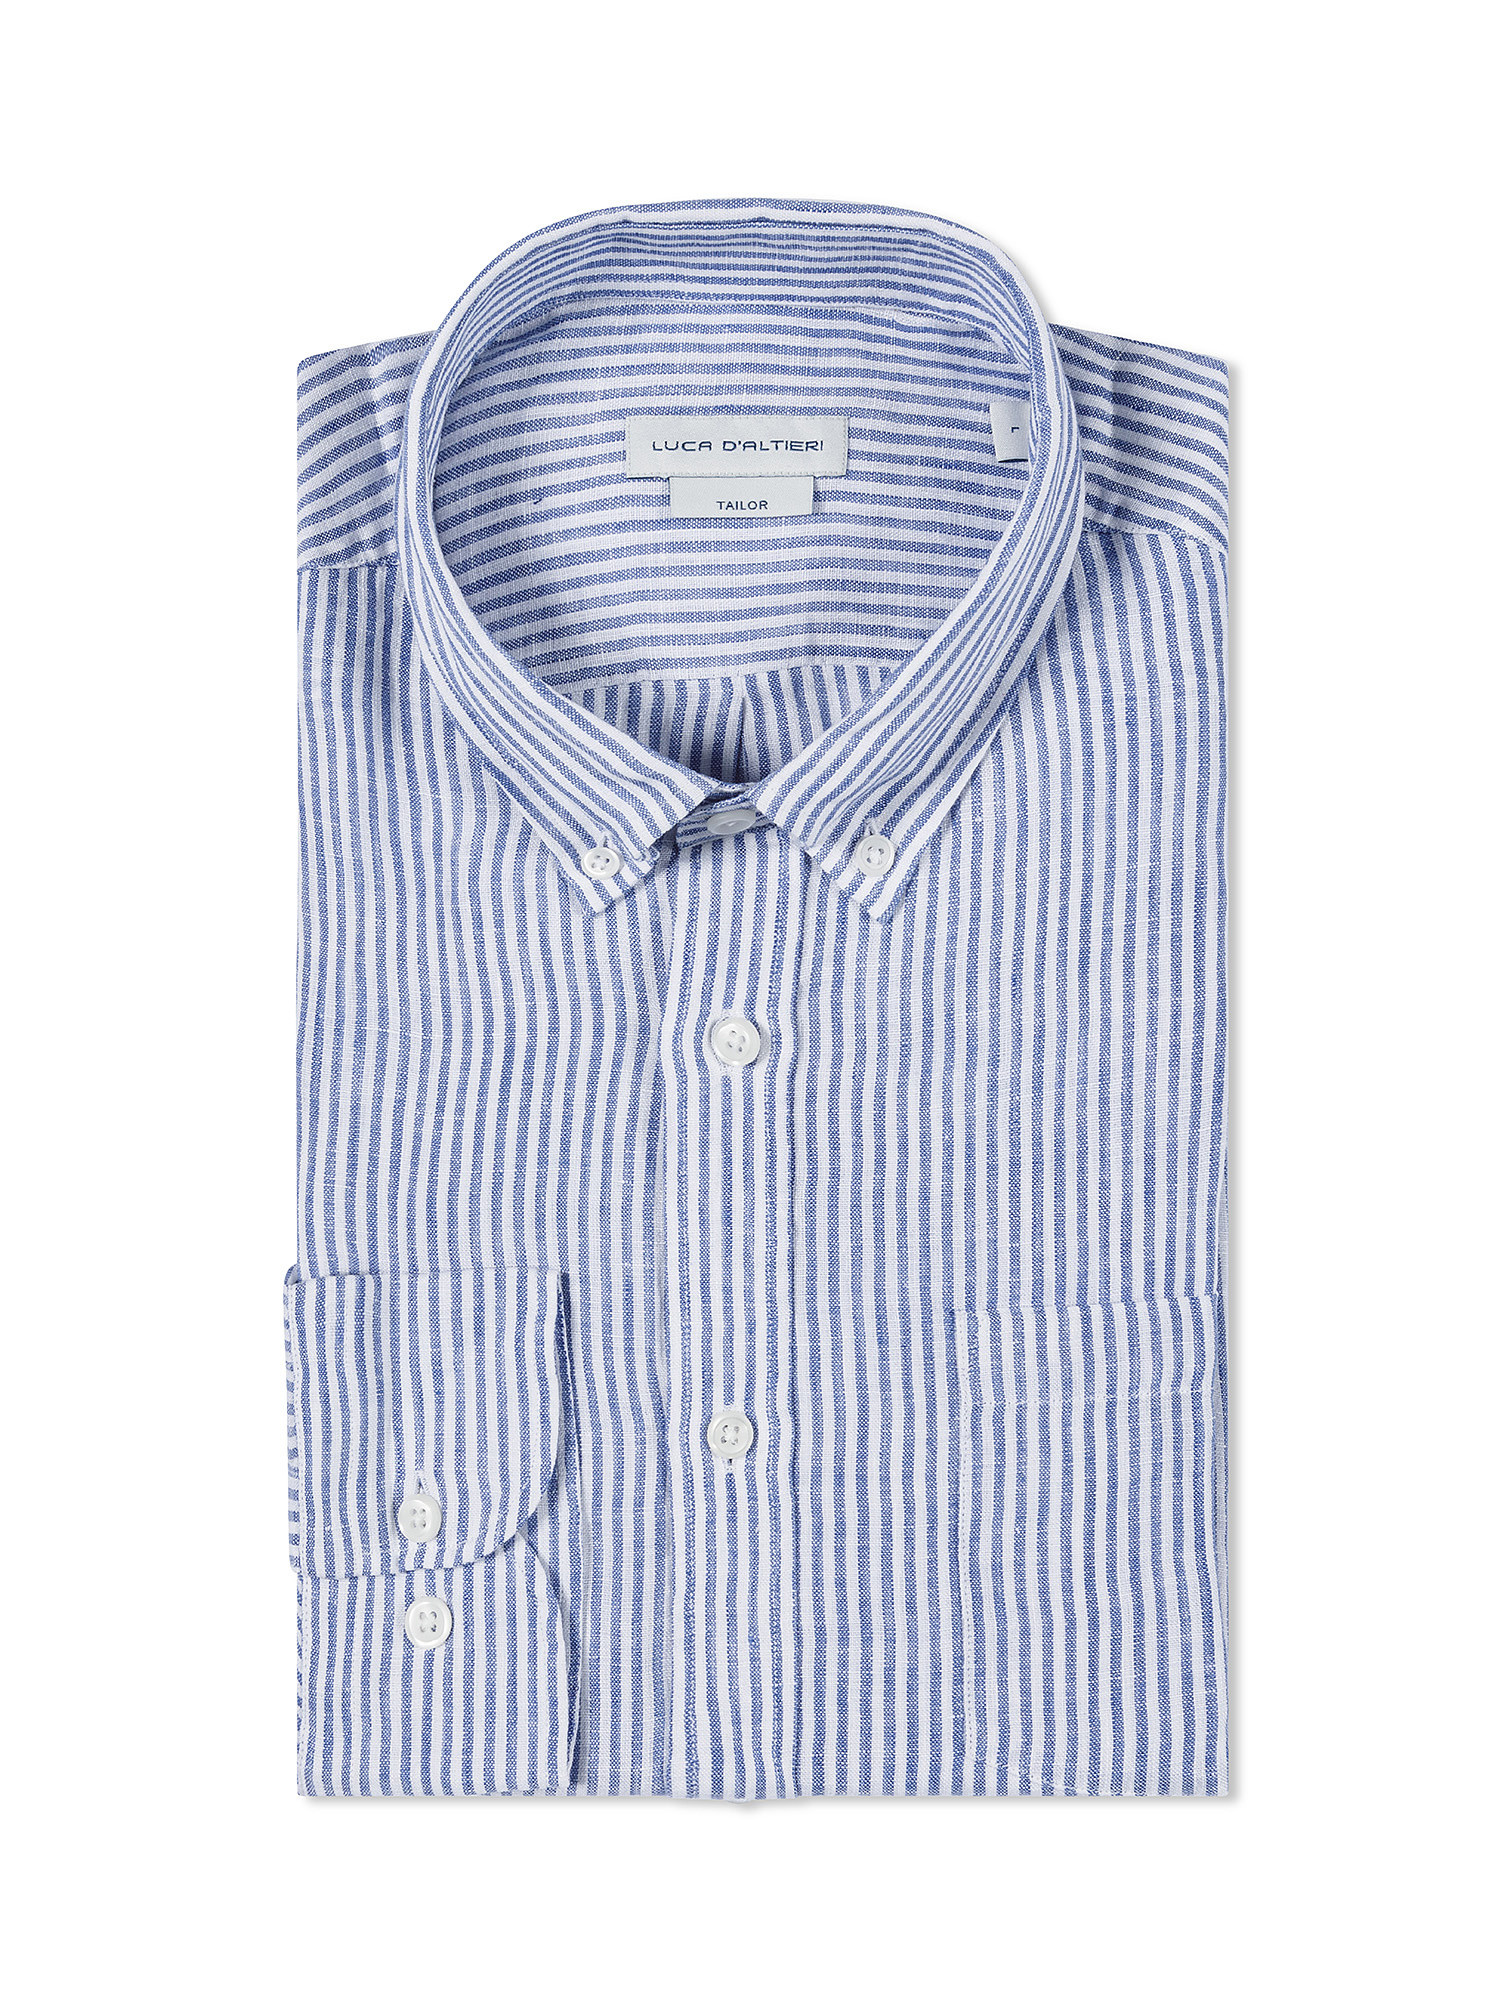 Luca D'Altieri - Camicia tailor fit in puro lino, Blu, large image number 2